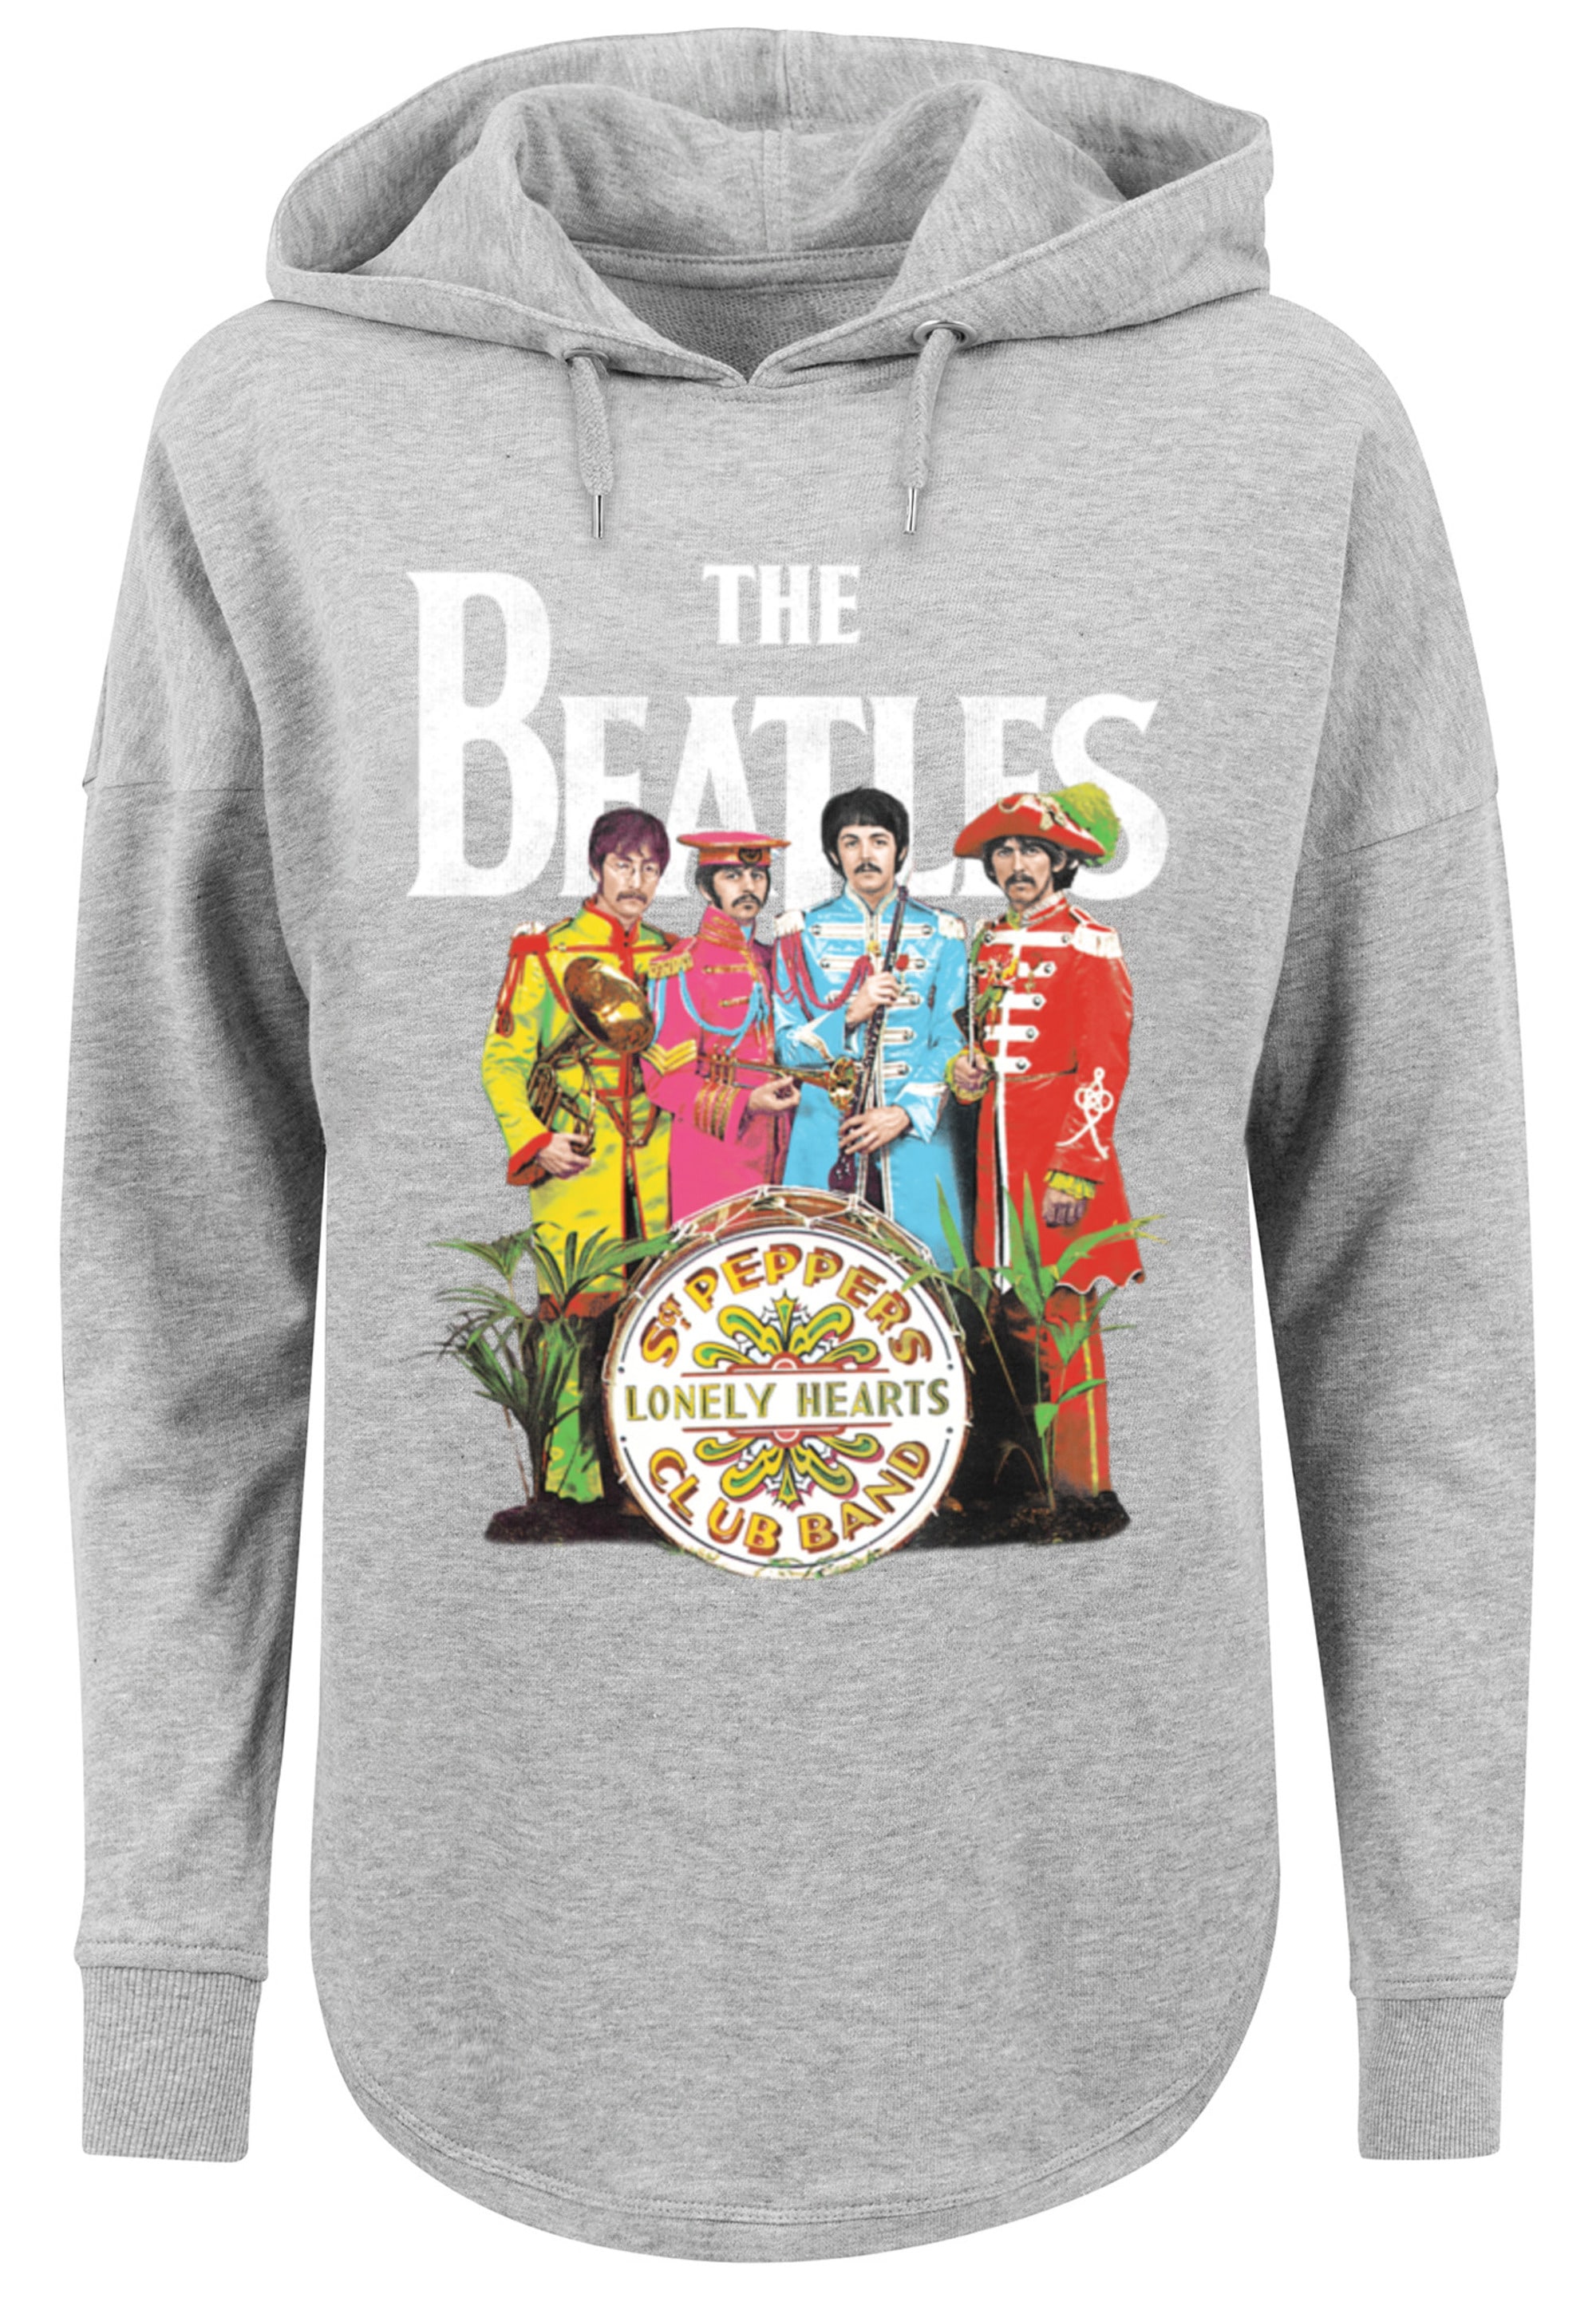 F4NT4STIC Kapuzenpullover »The Beatles Band Sgt Pepper Black«, Print kaufen  | I'm walking